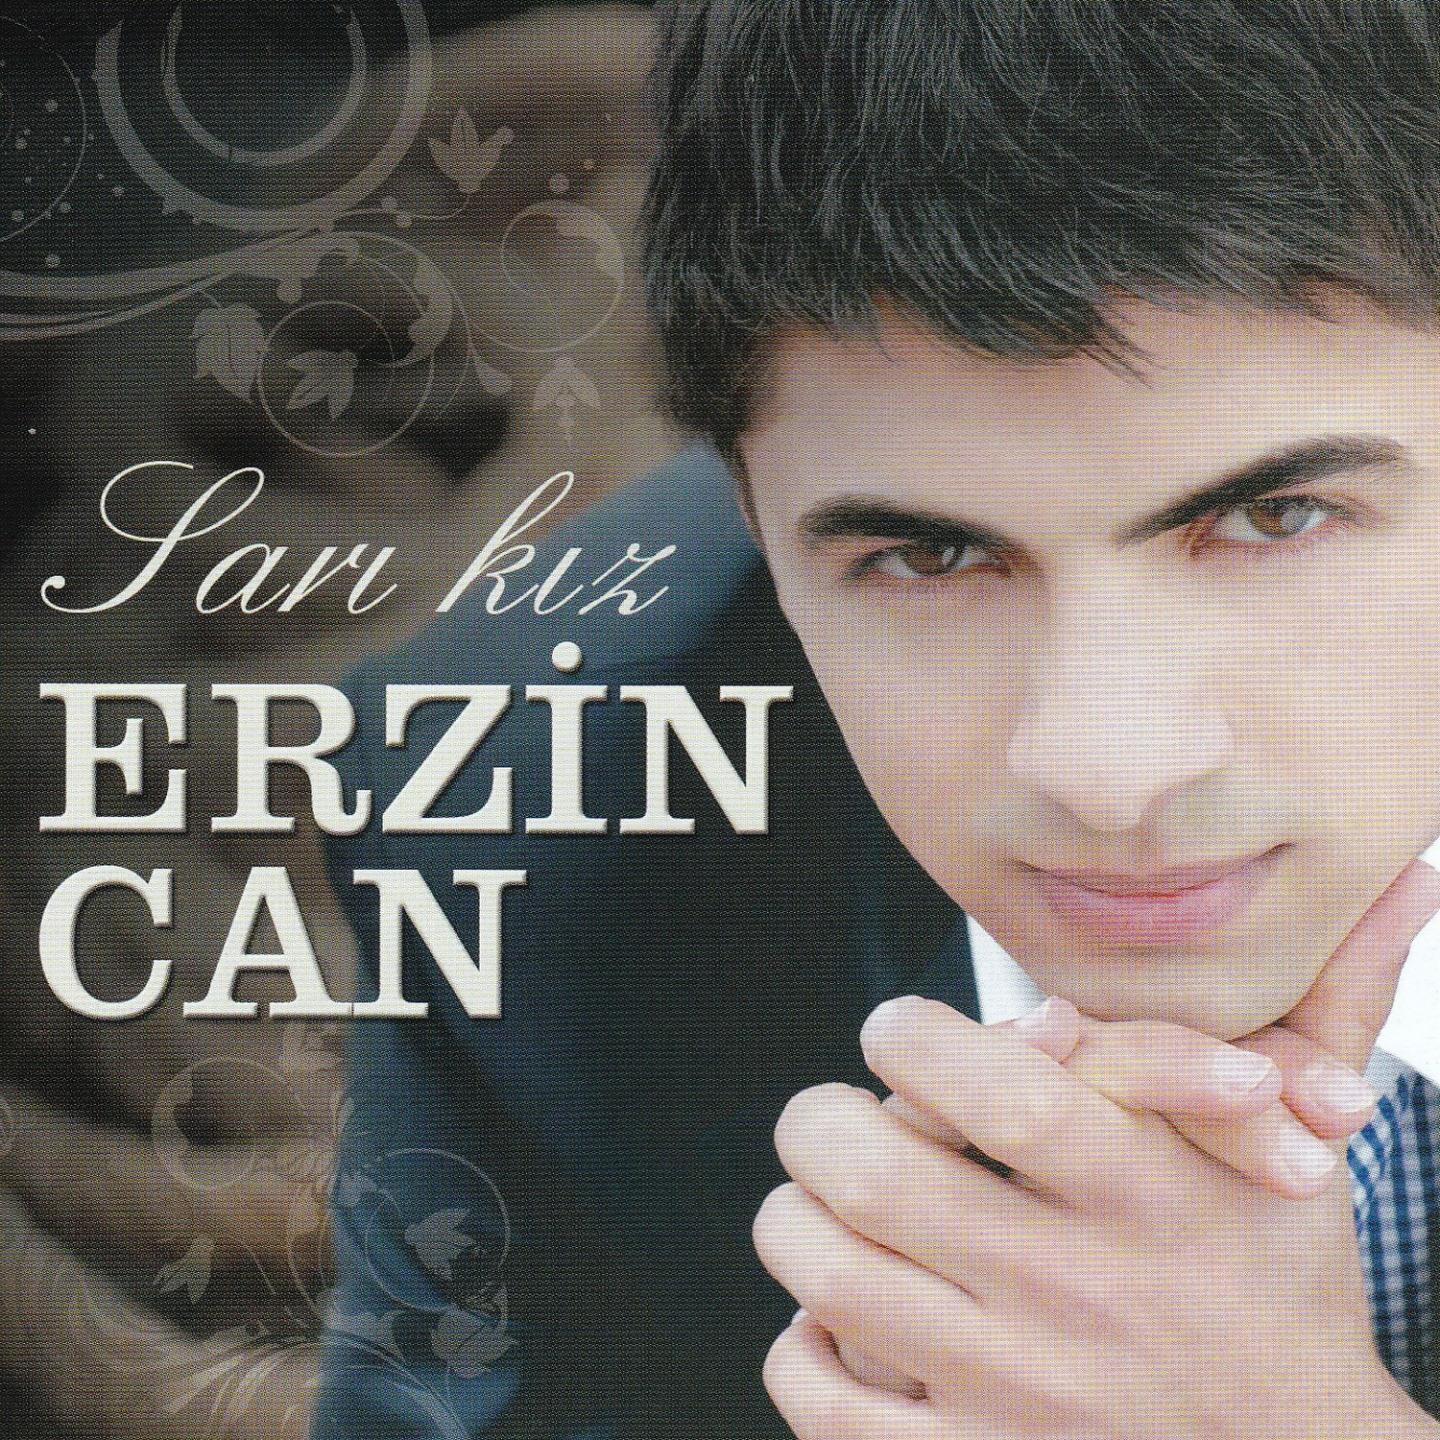 Постер альбома Sarı Kız